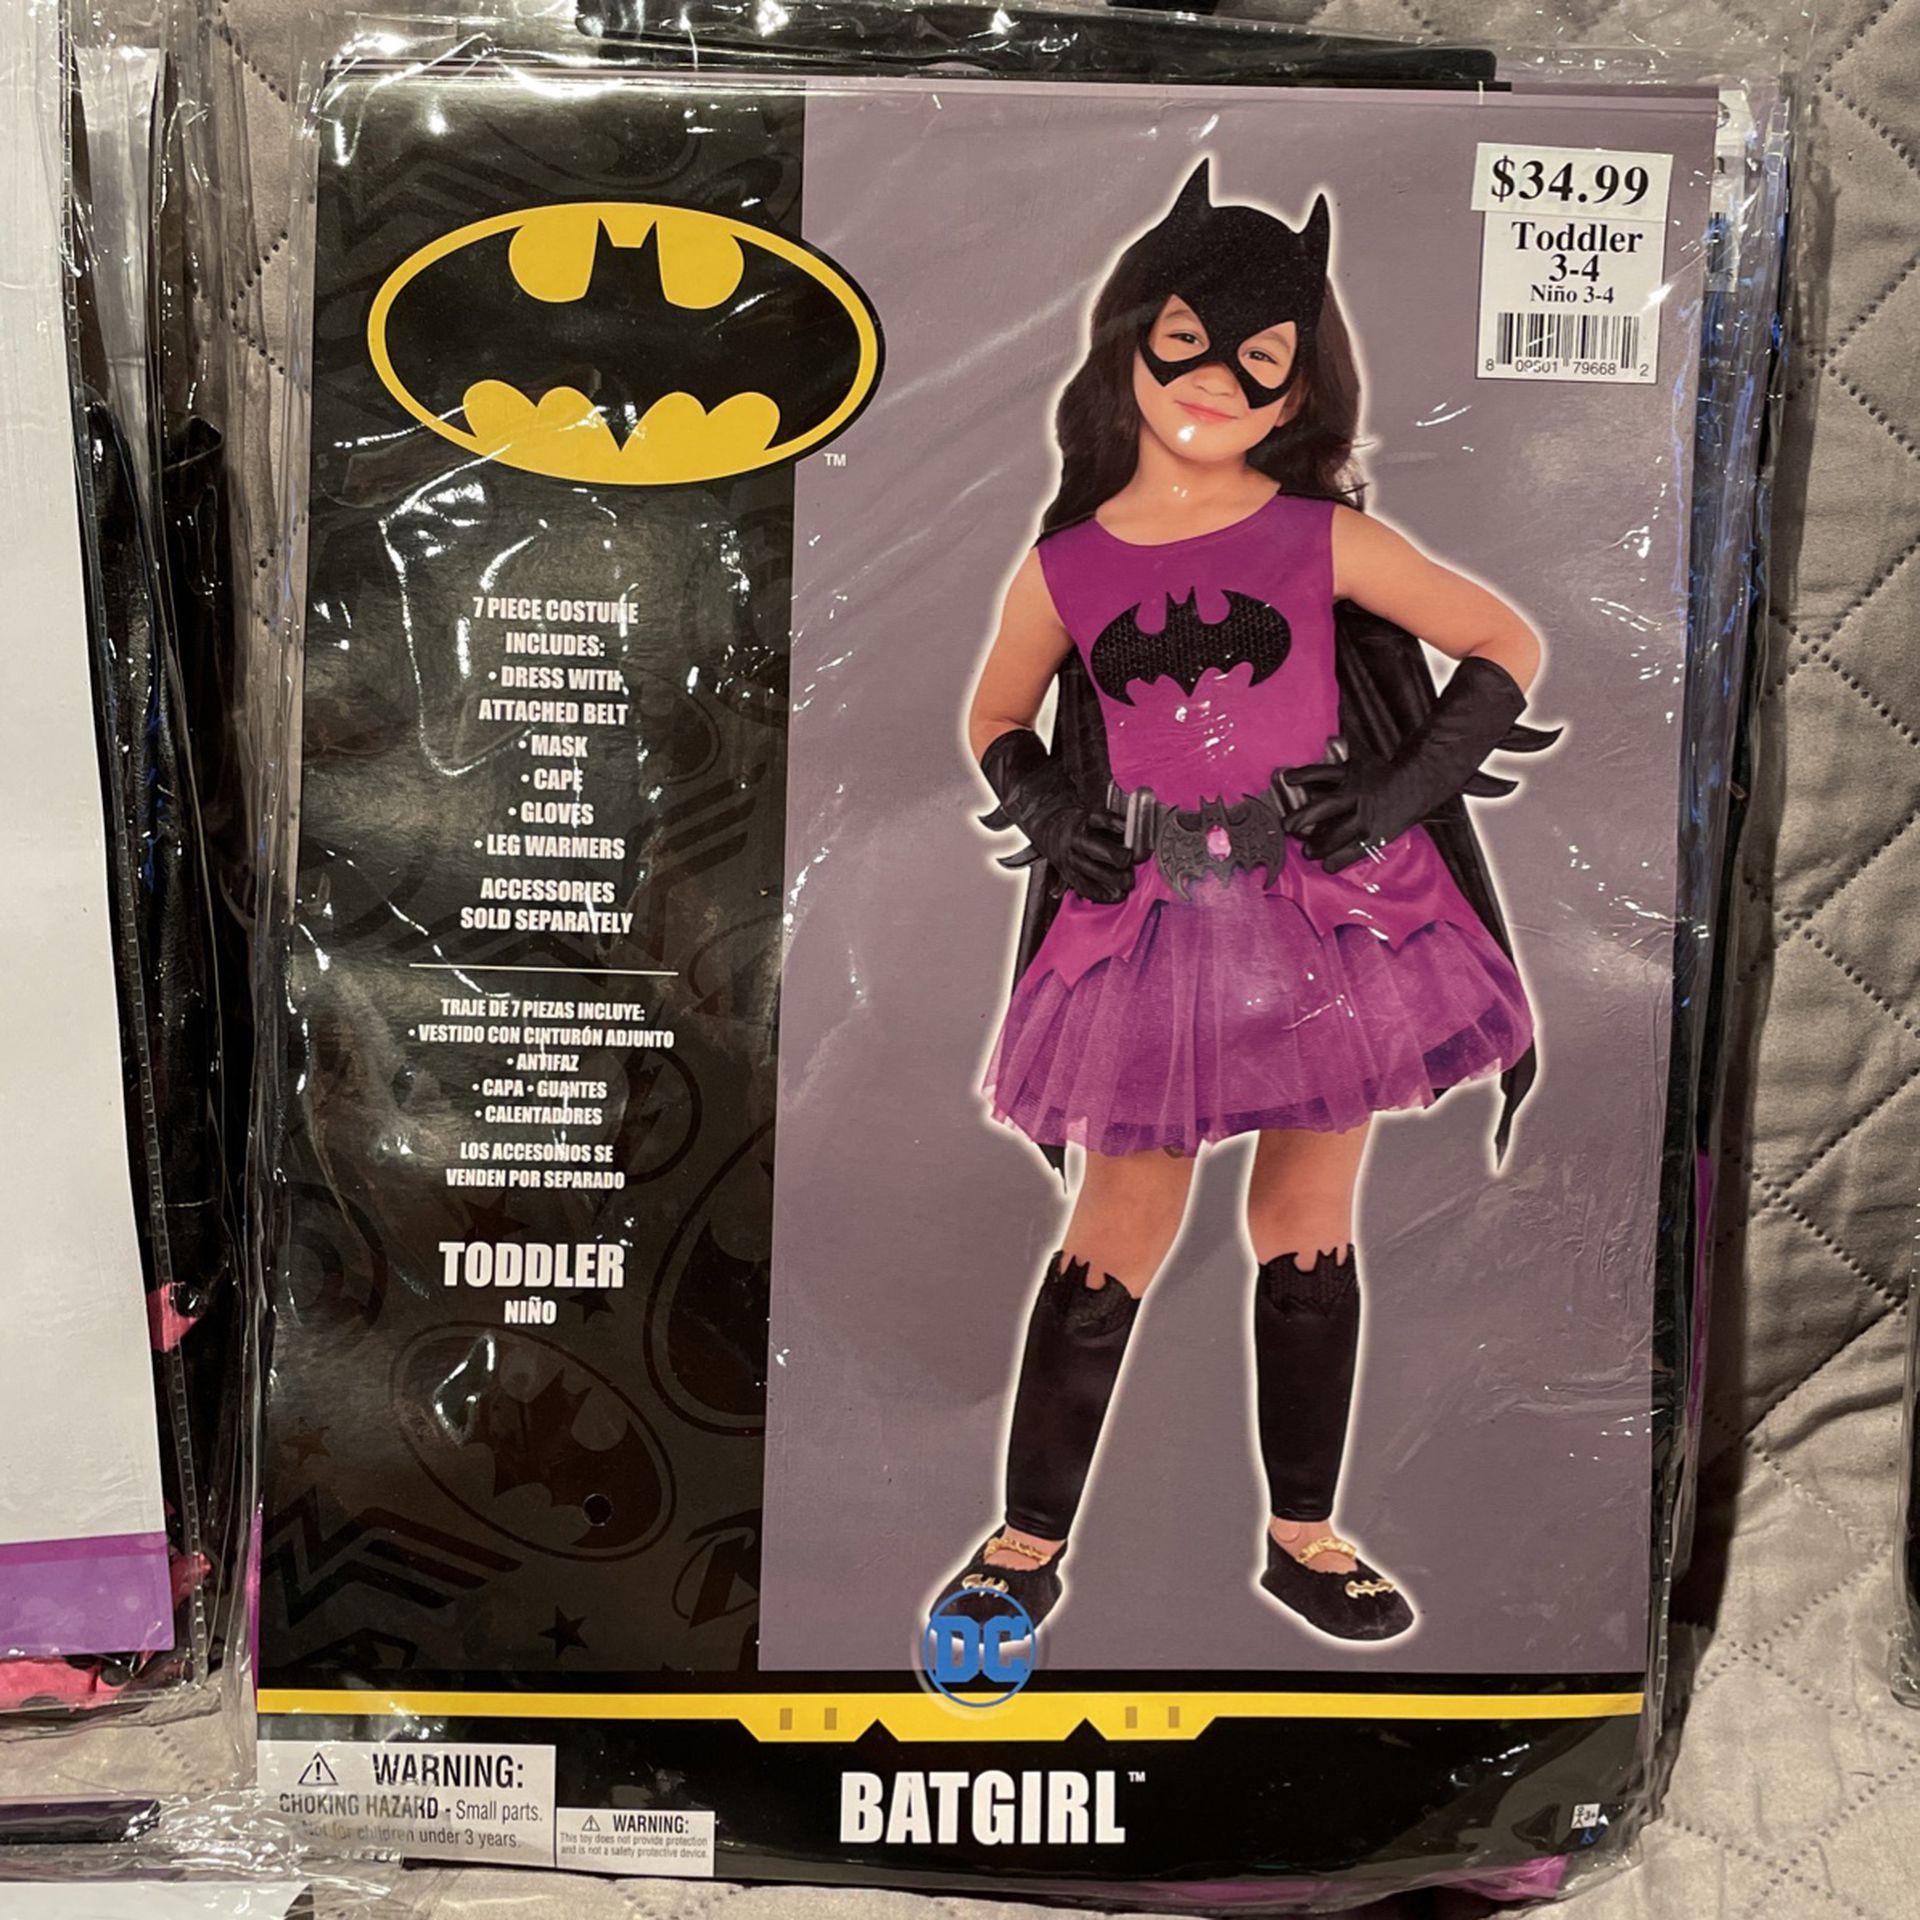 Toddler “Bat girl” Halloween costume